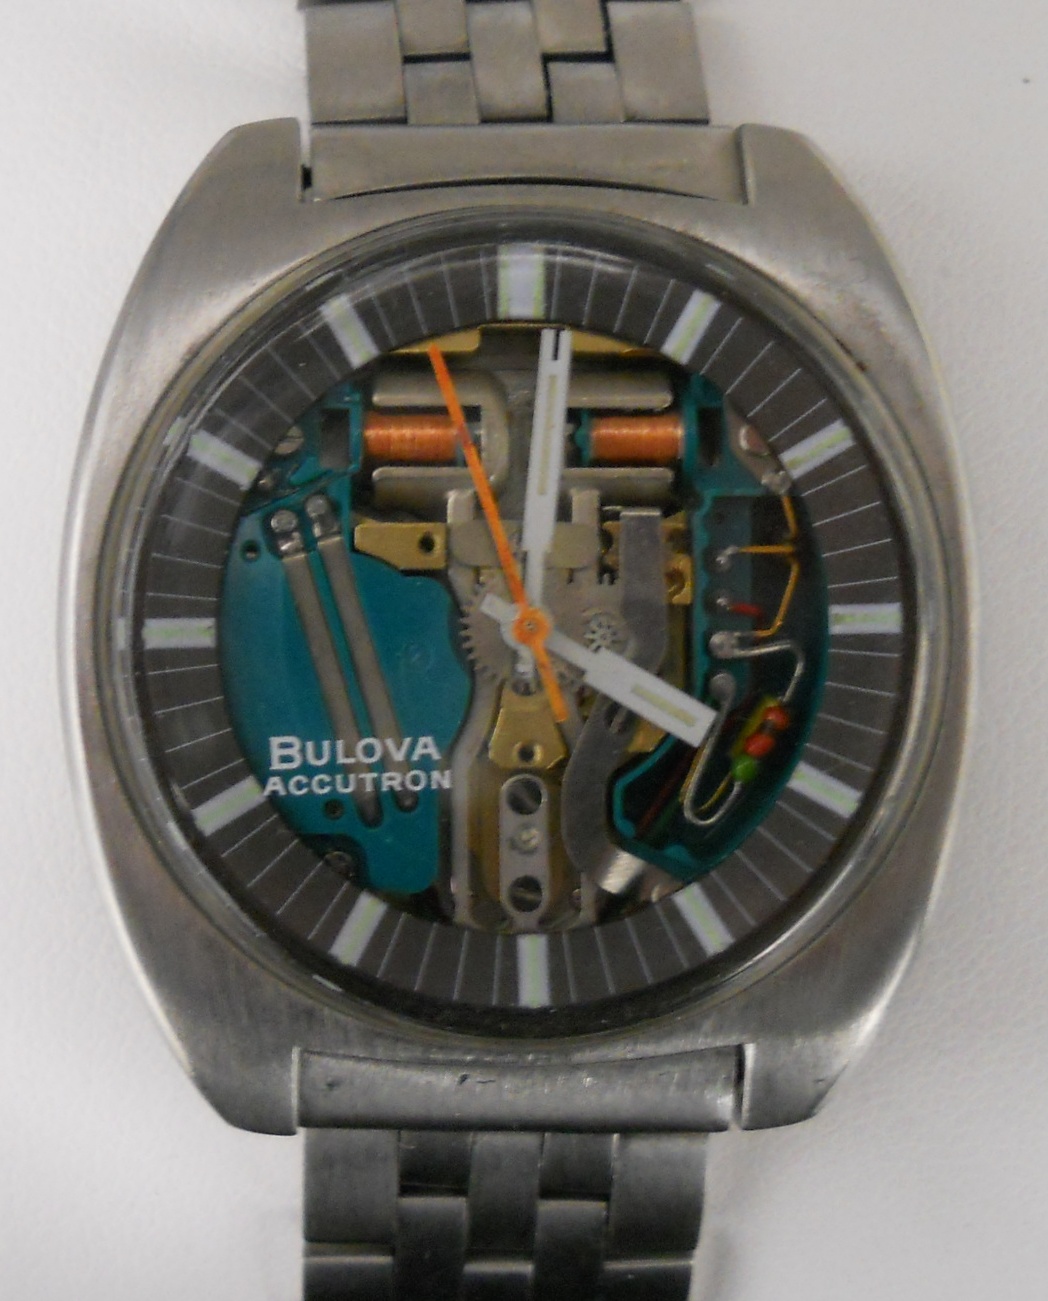 dating bulova accutron watches